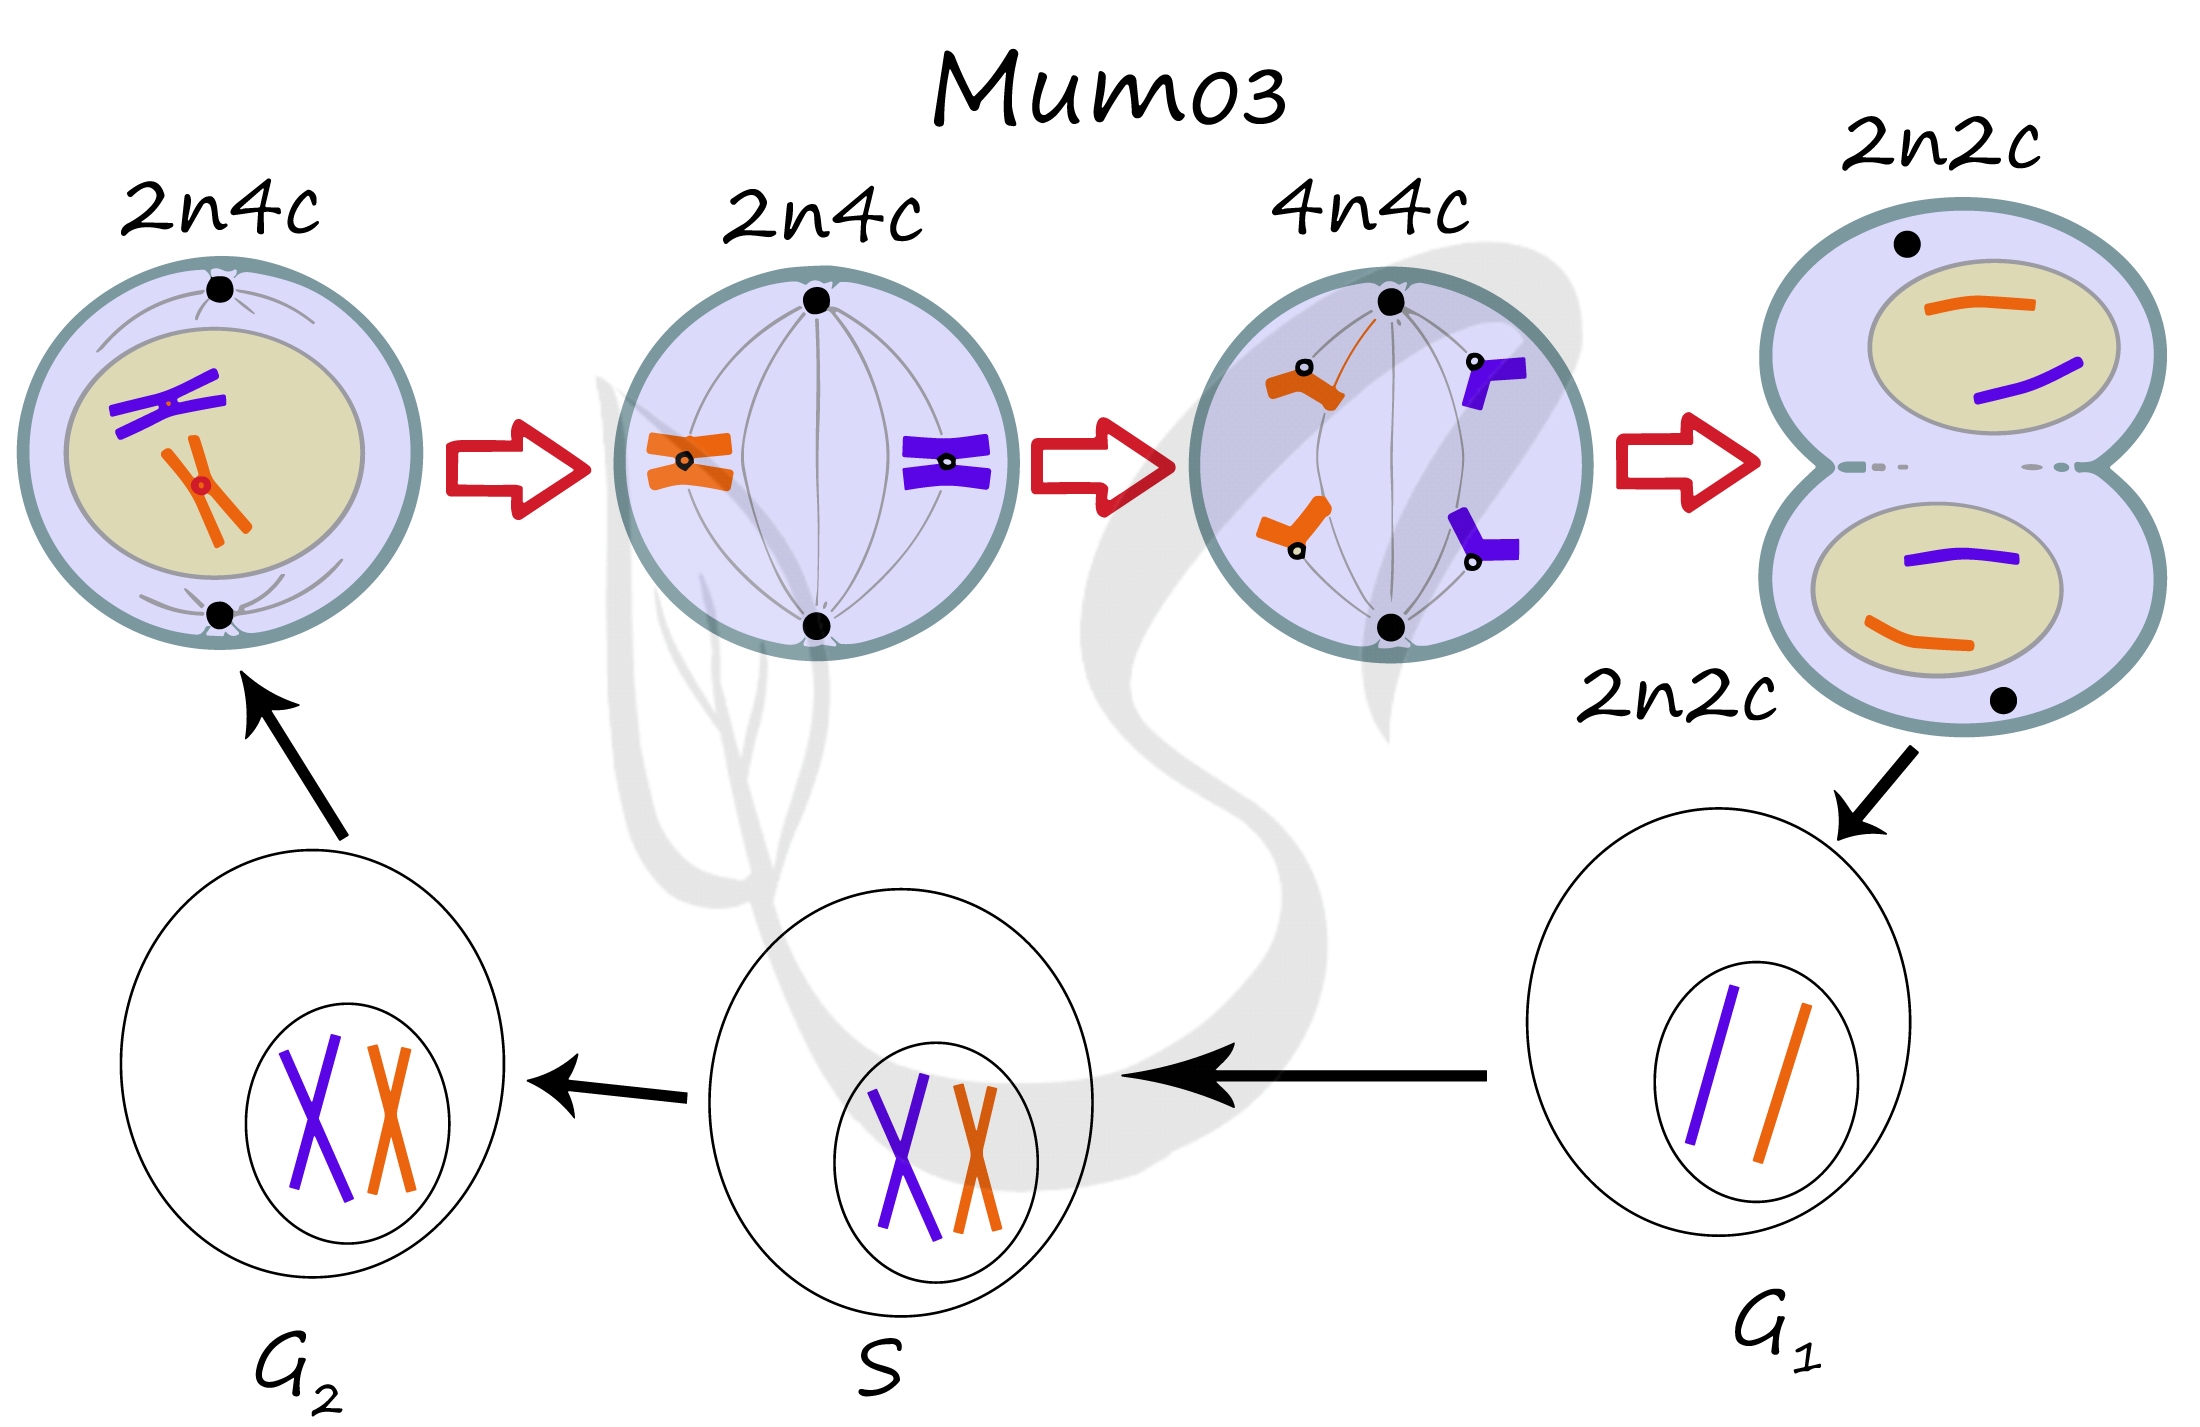 Сколько хромосом в телофазе мейоза 1. Схема митоза 2n. Схема мейоза для клетки с хромосомным набором 2n 6. Фазы митоза 2n2c. Митоз схема 2n2c.